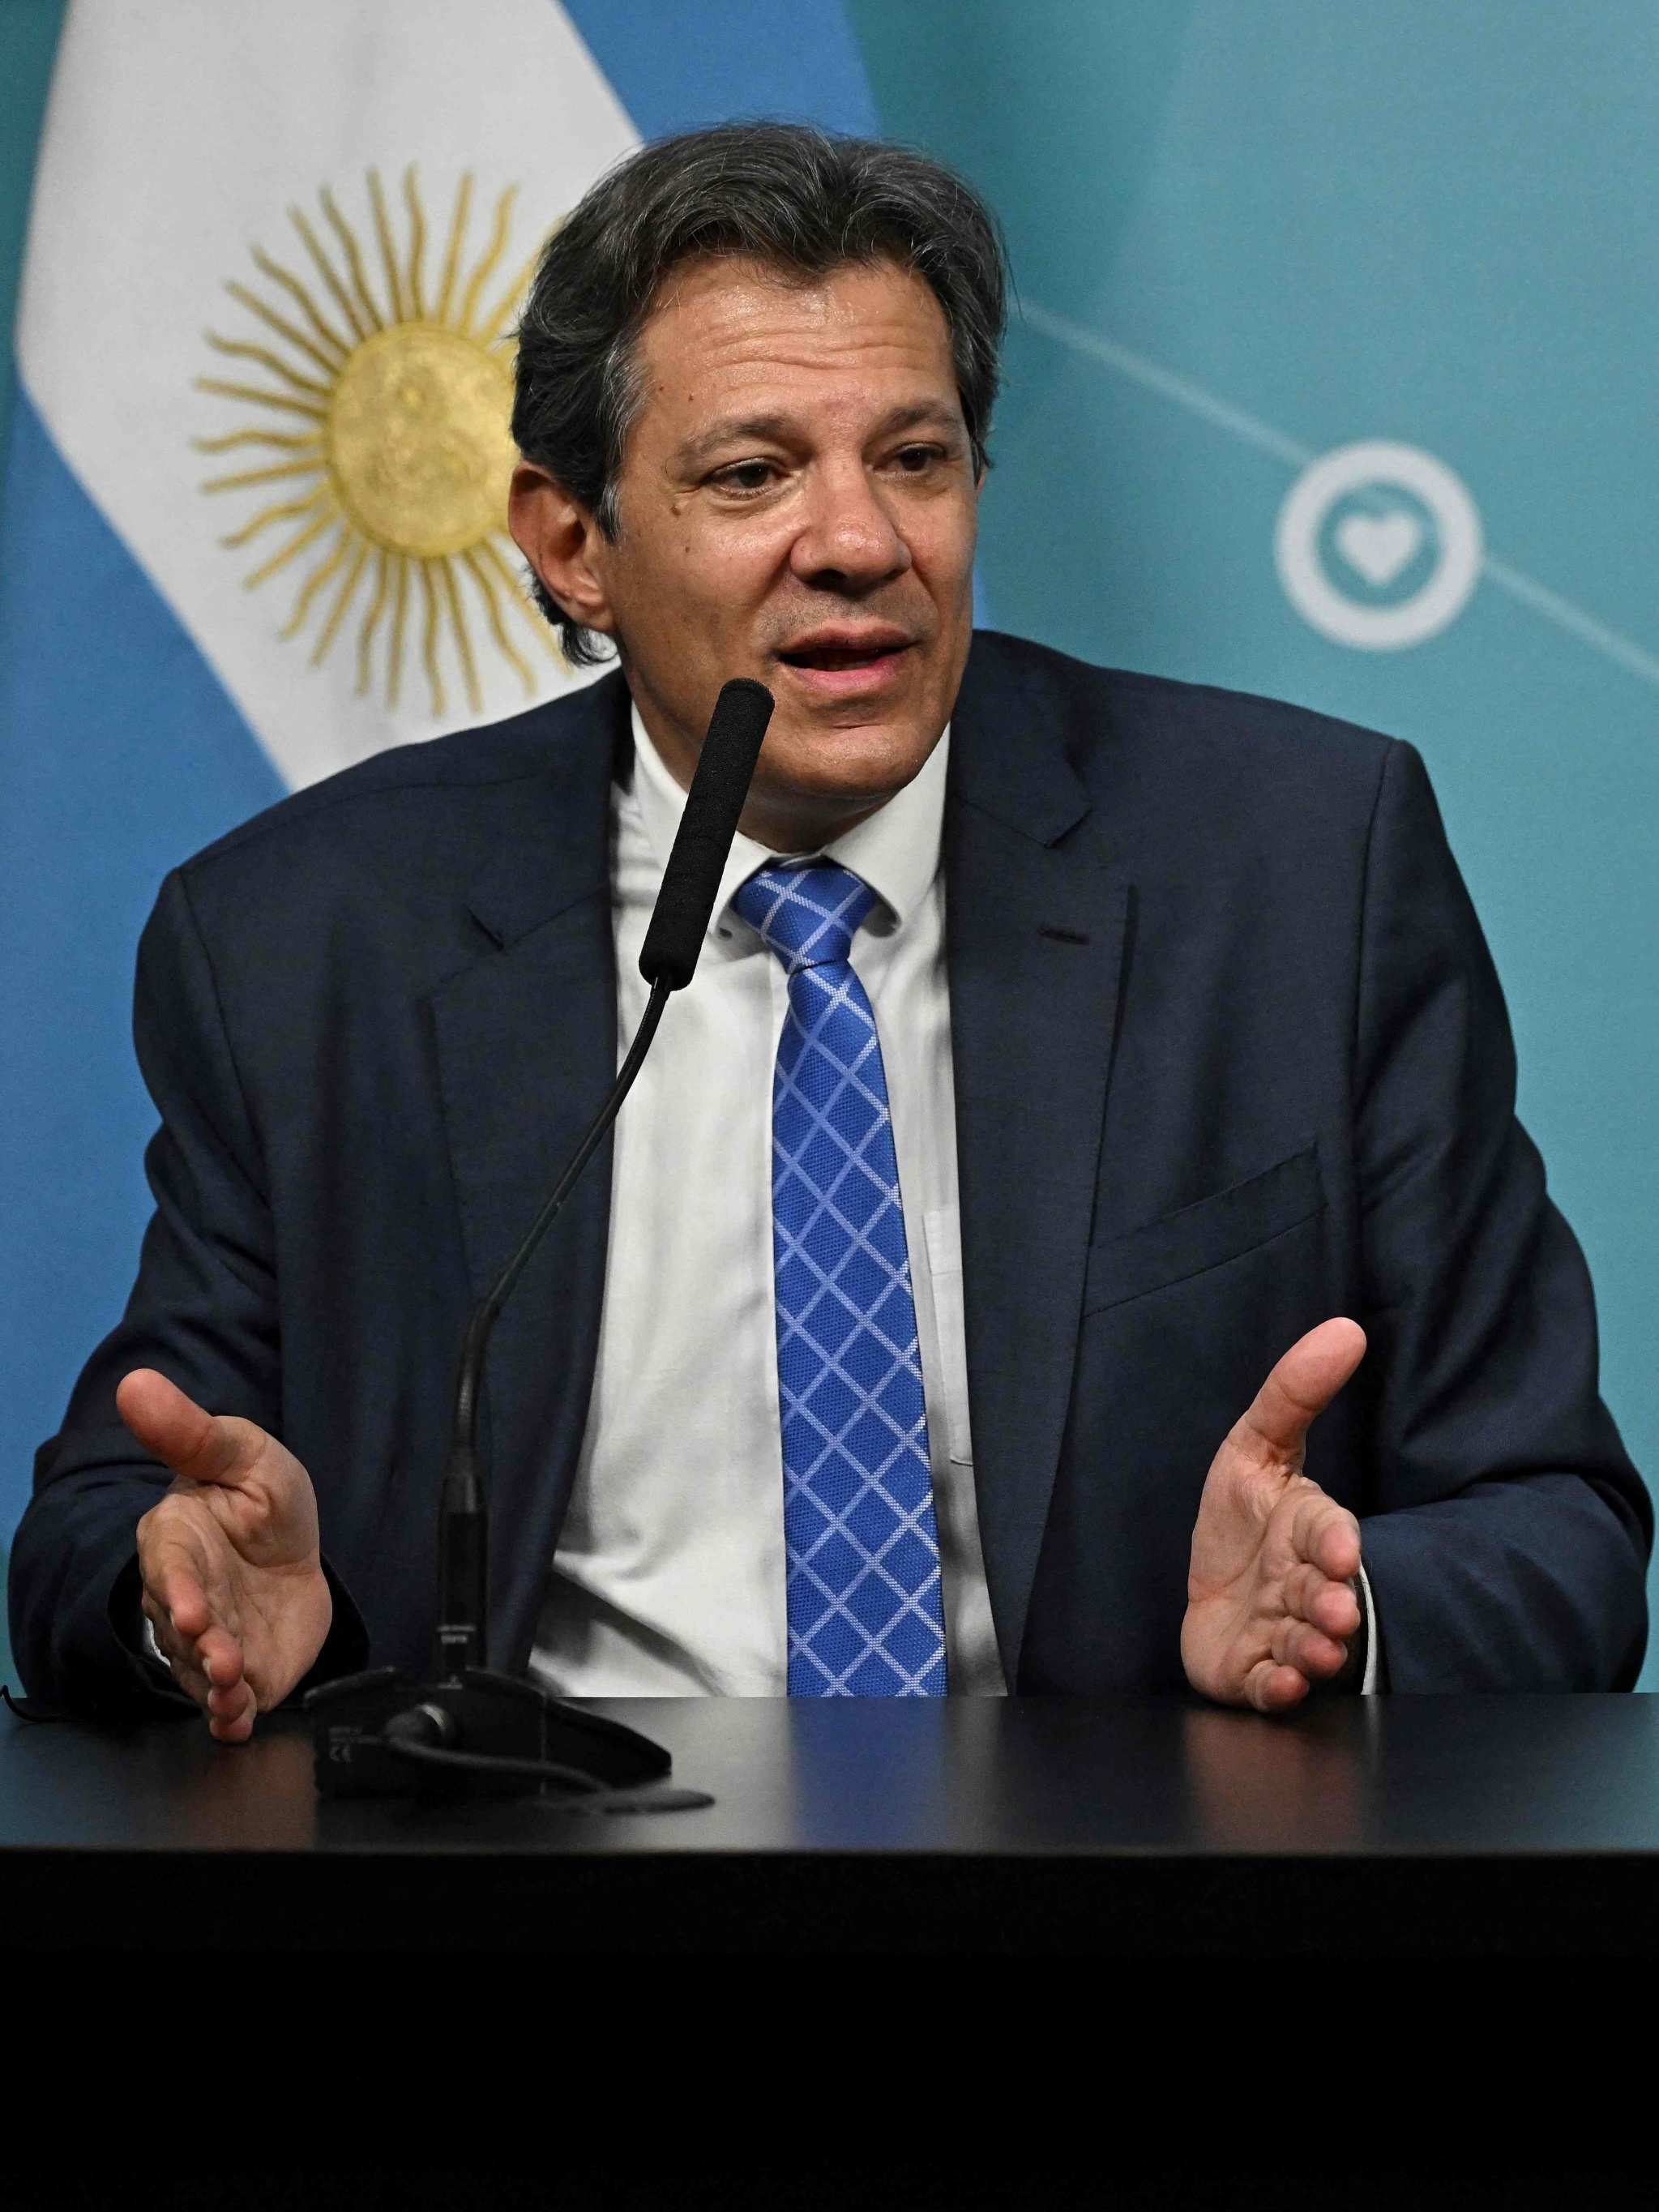 Mercosul está ameaçado por narrativas na Argentina, diz Haddad